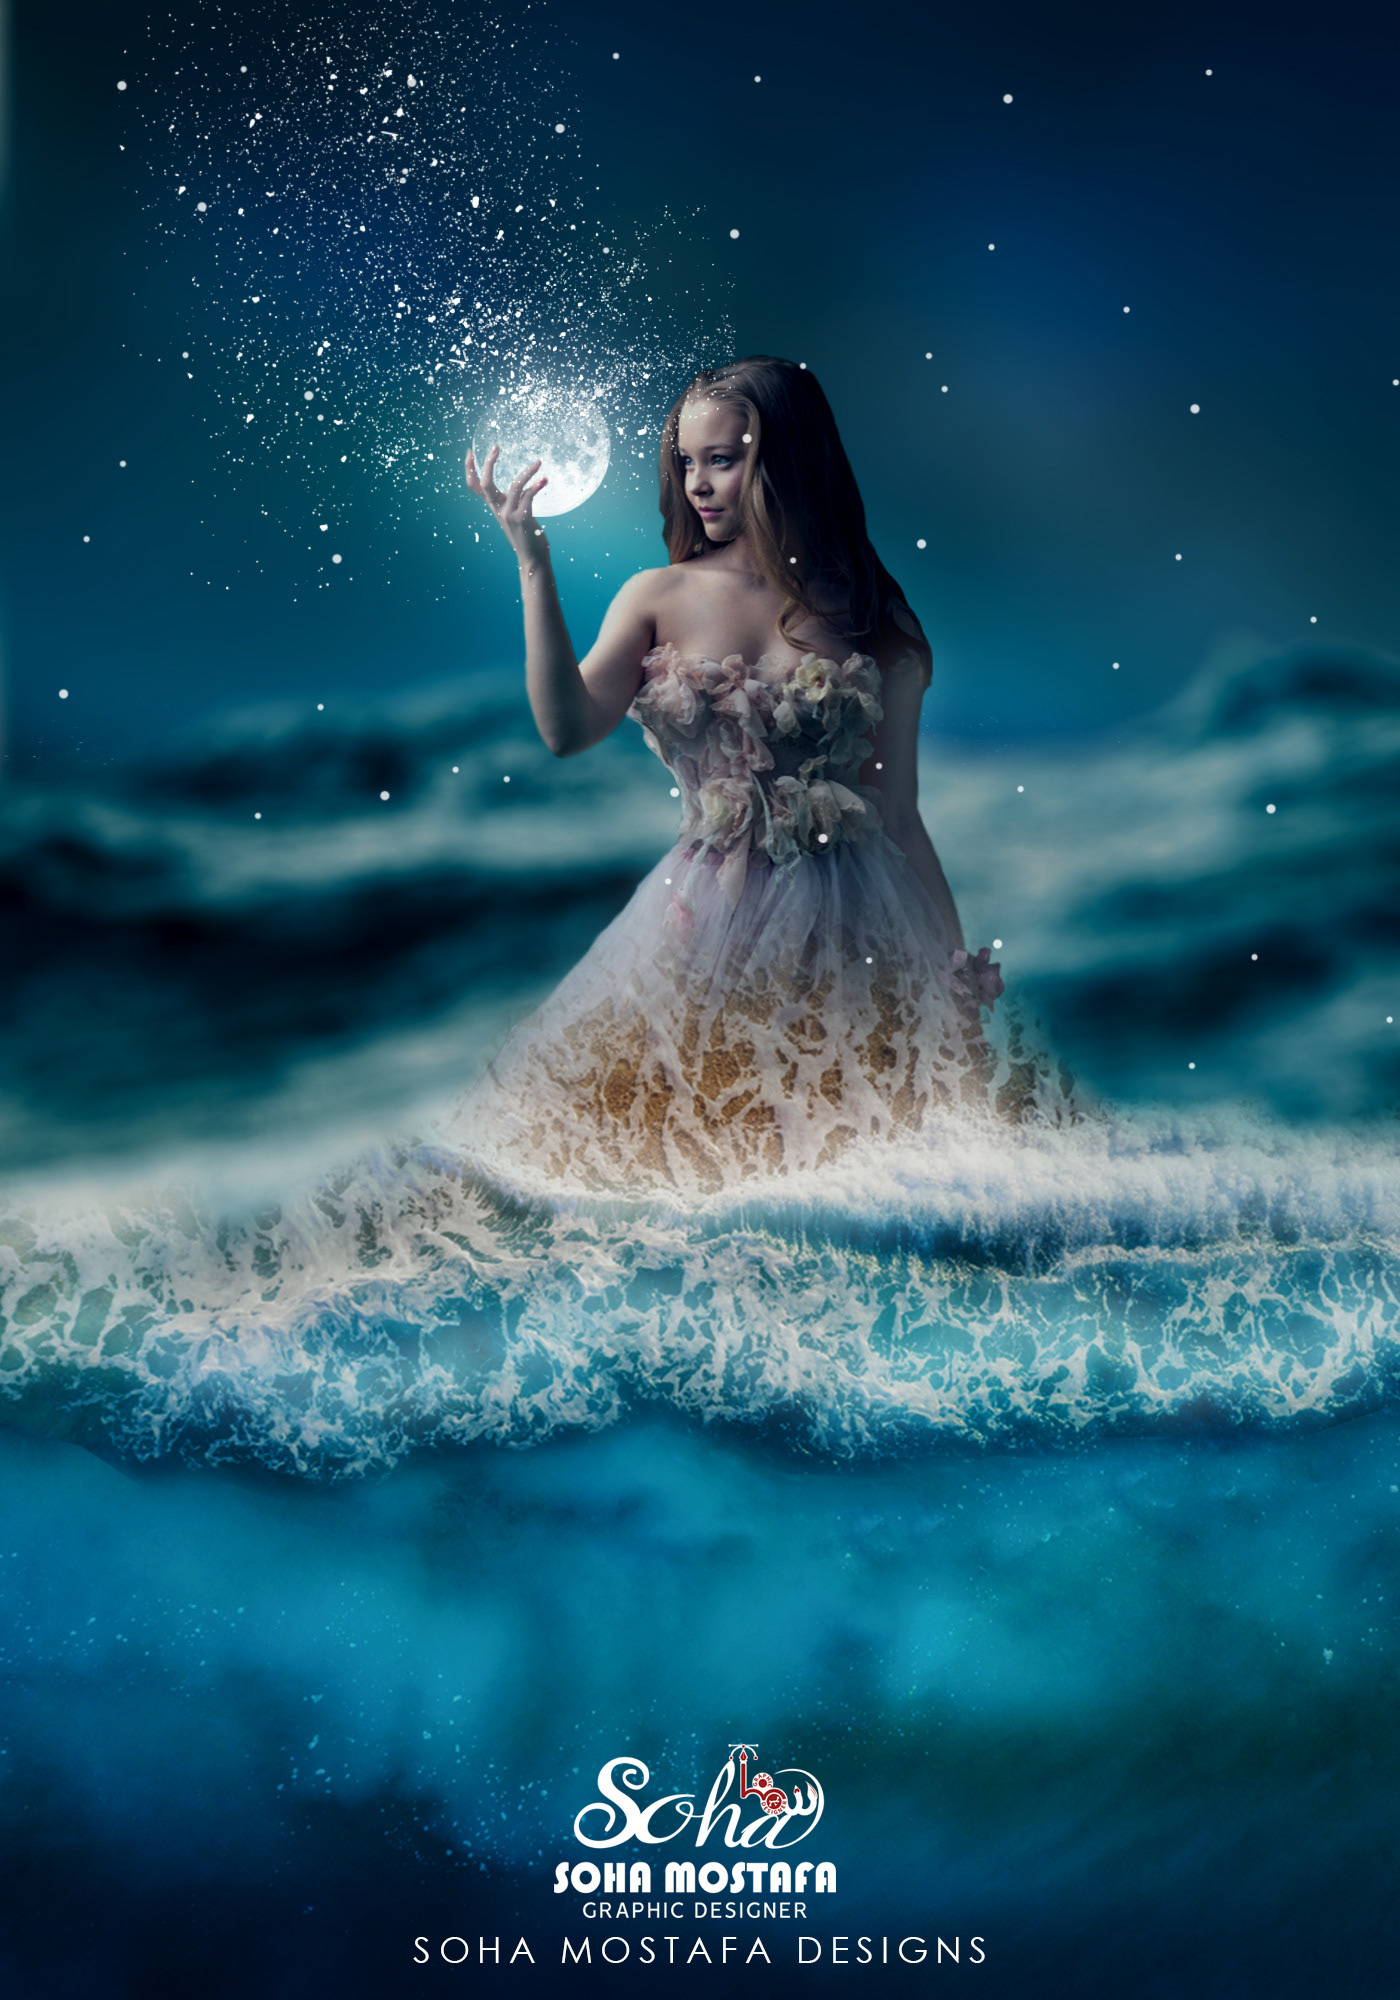 sea and moon magic photo manipulation